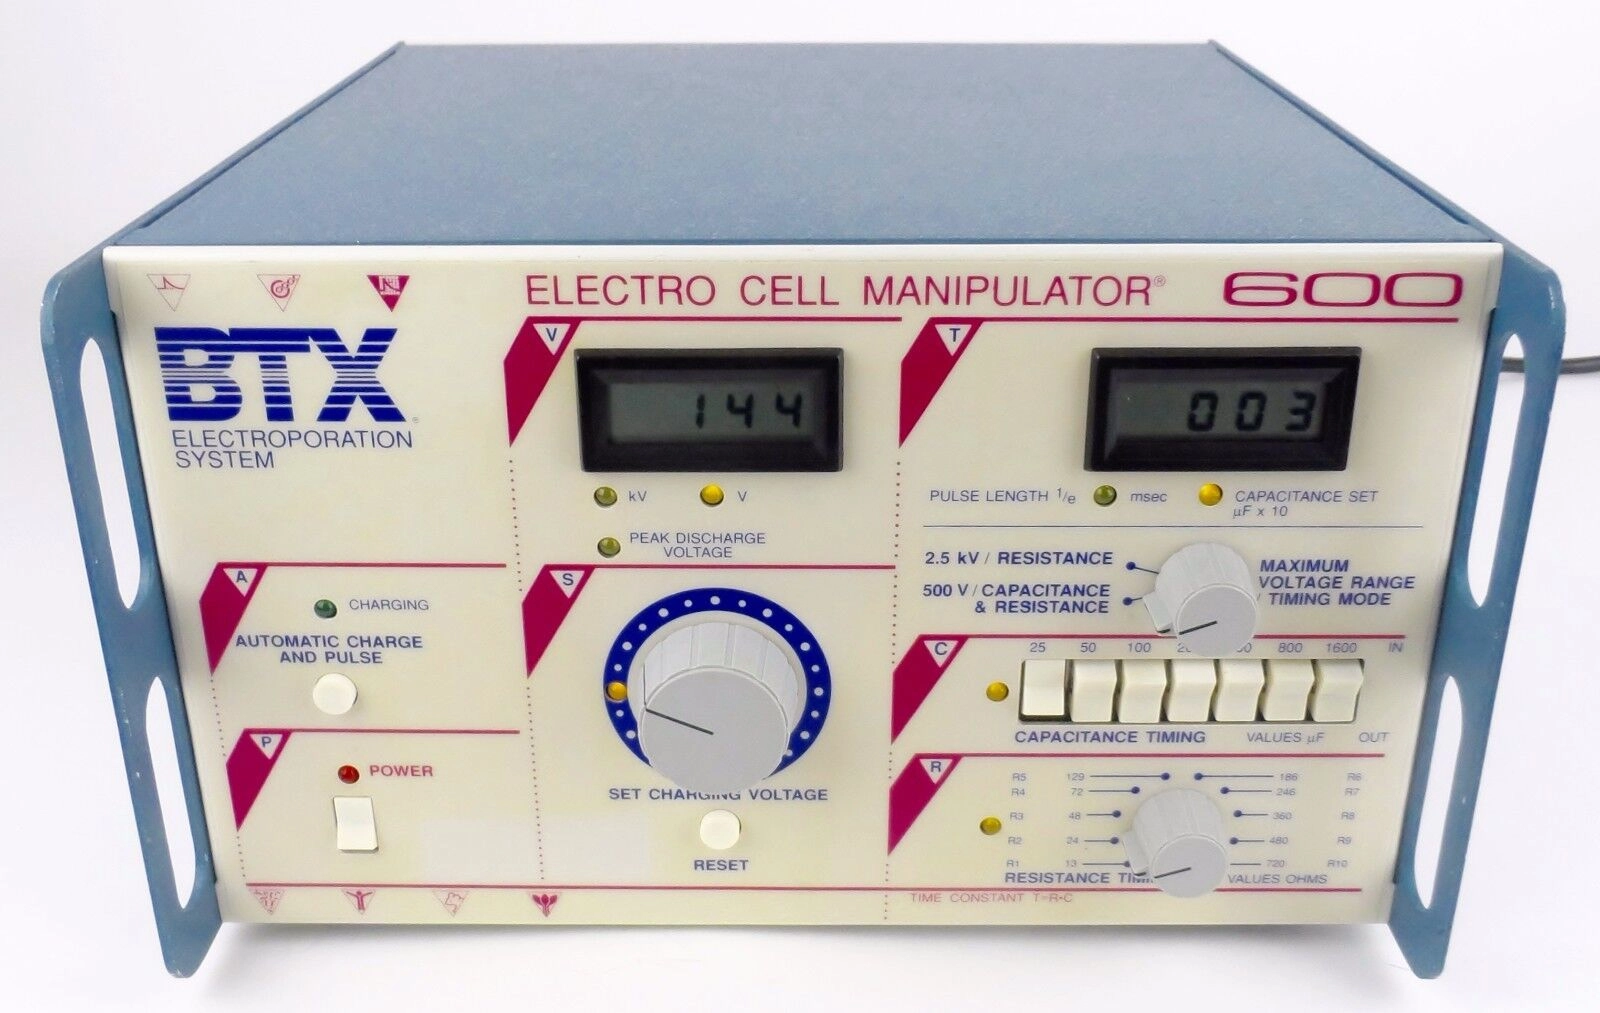 BTX Electroporation Electro Cell Manipulator 600